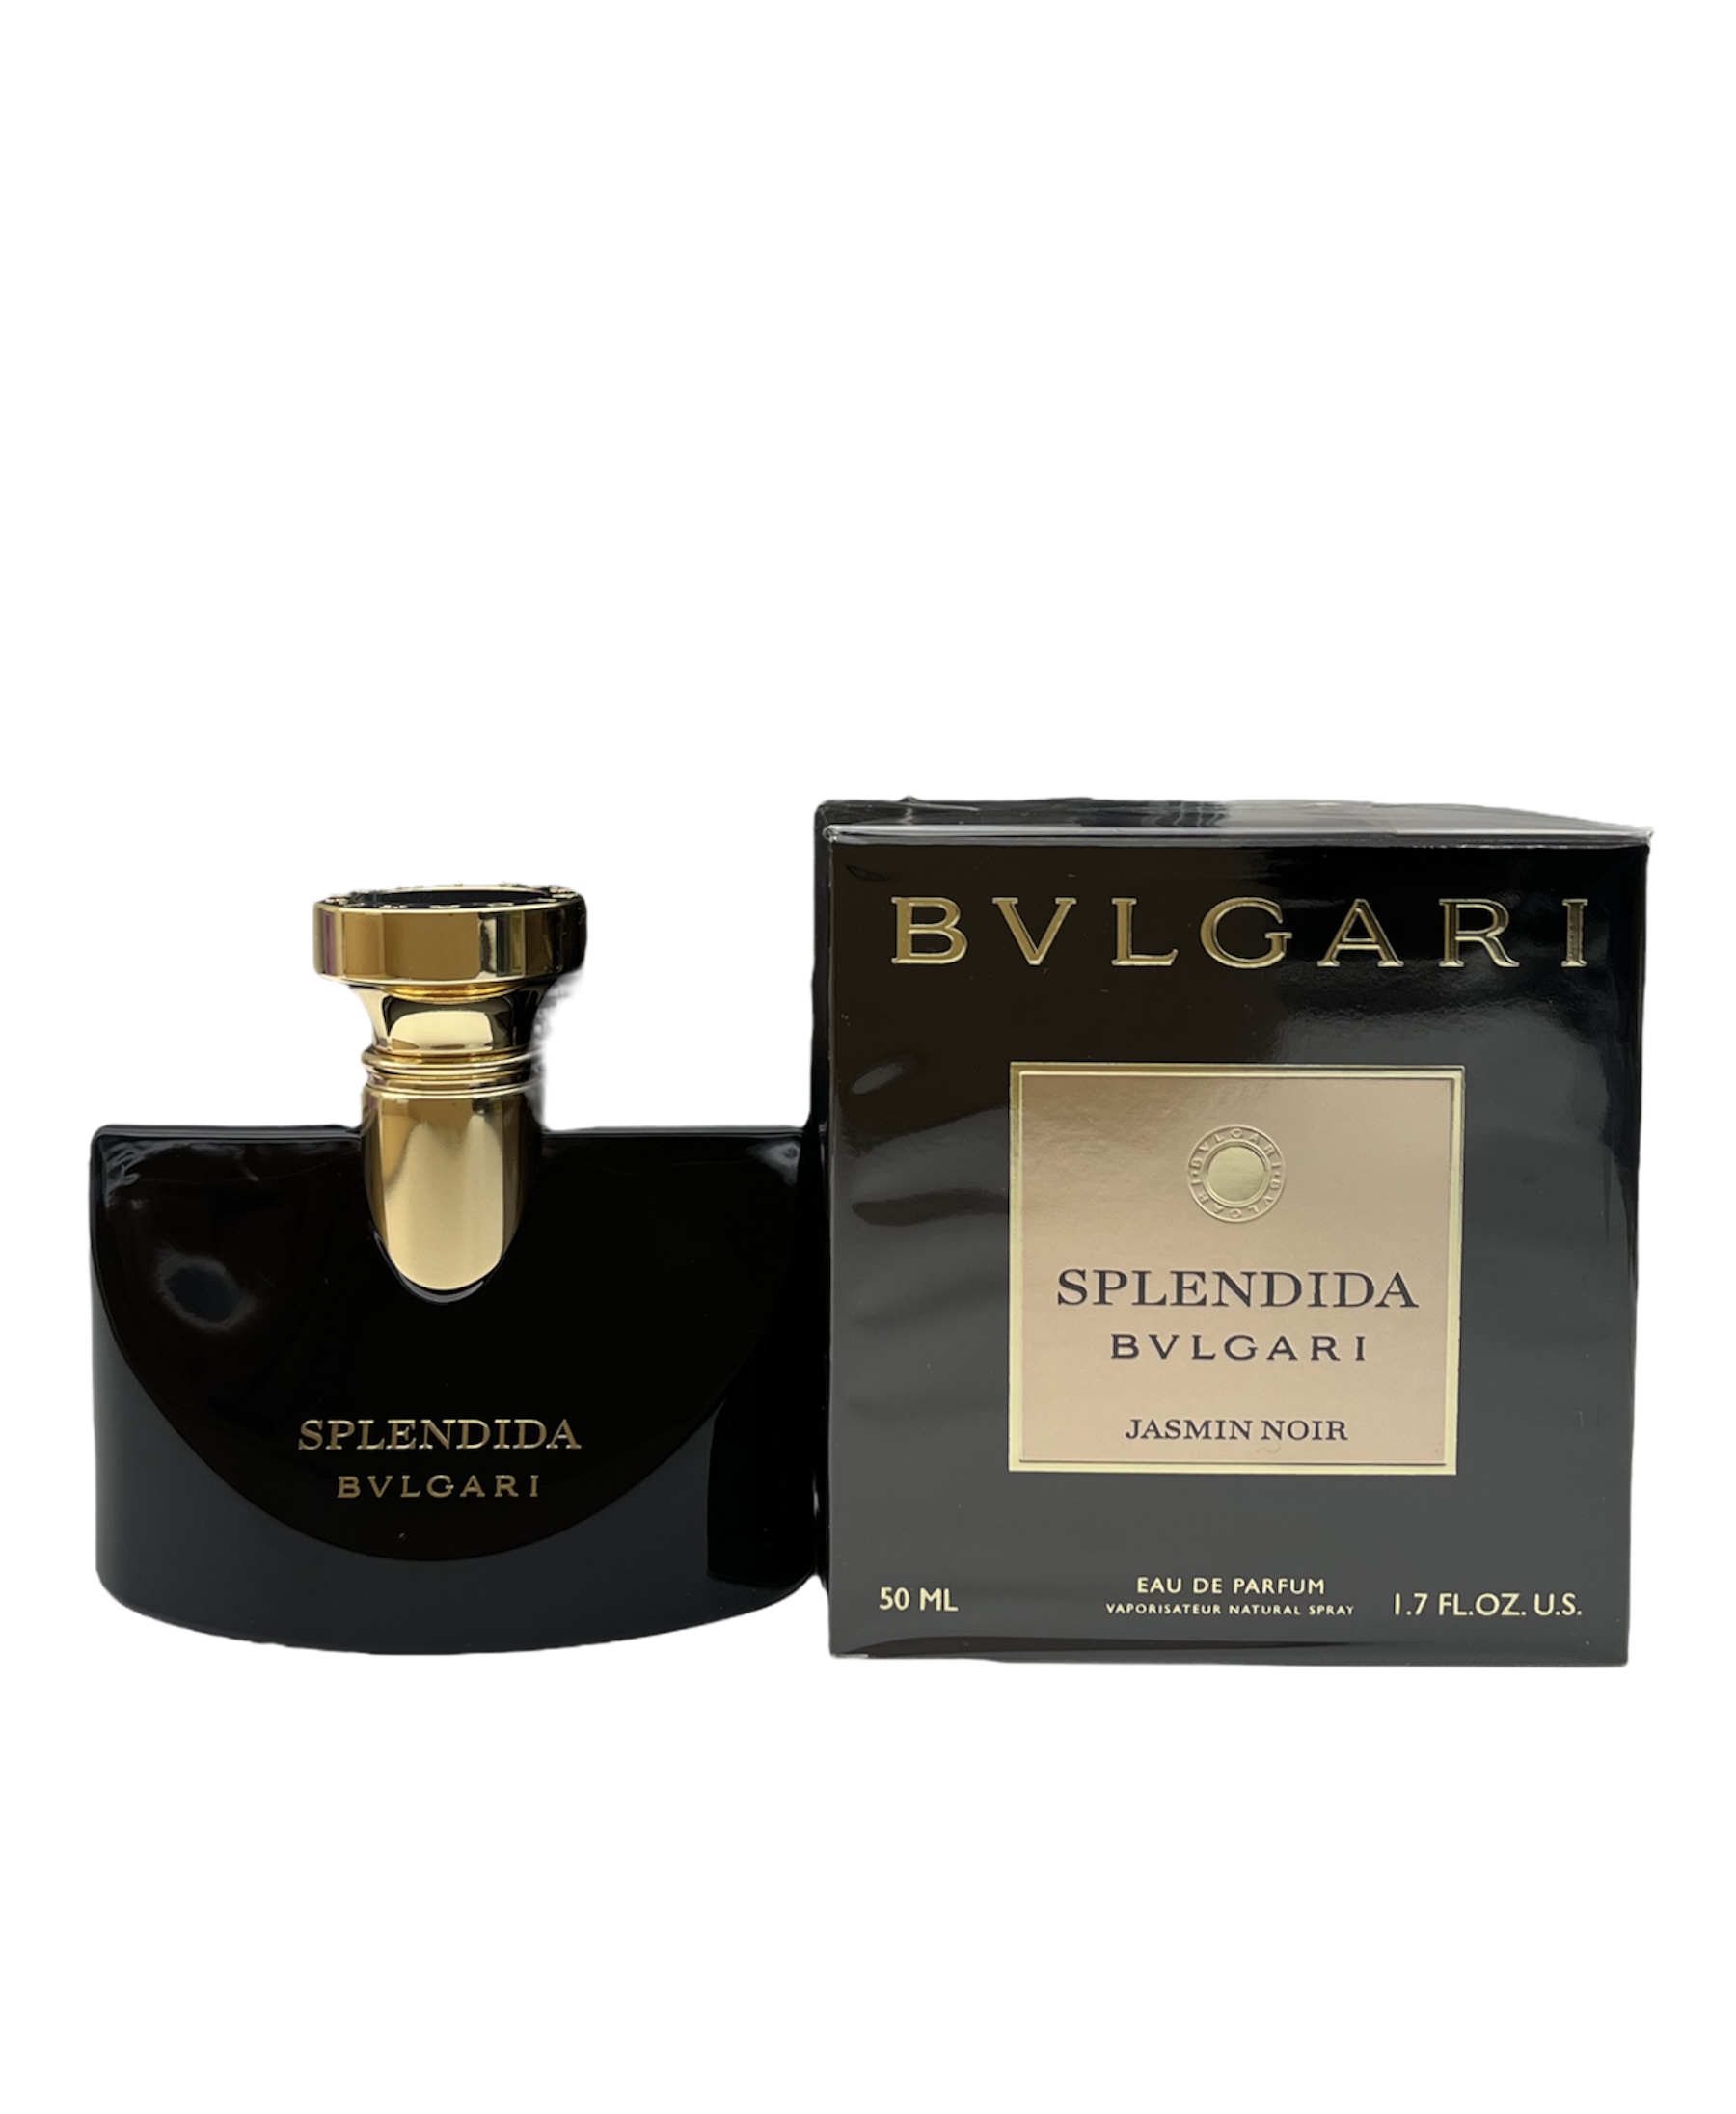  Bulgari Splendida Jasmin Noir Eau de Parfum 50ml 